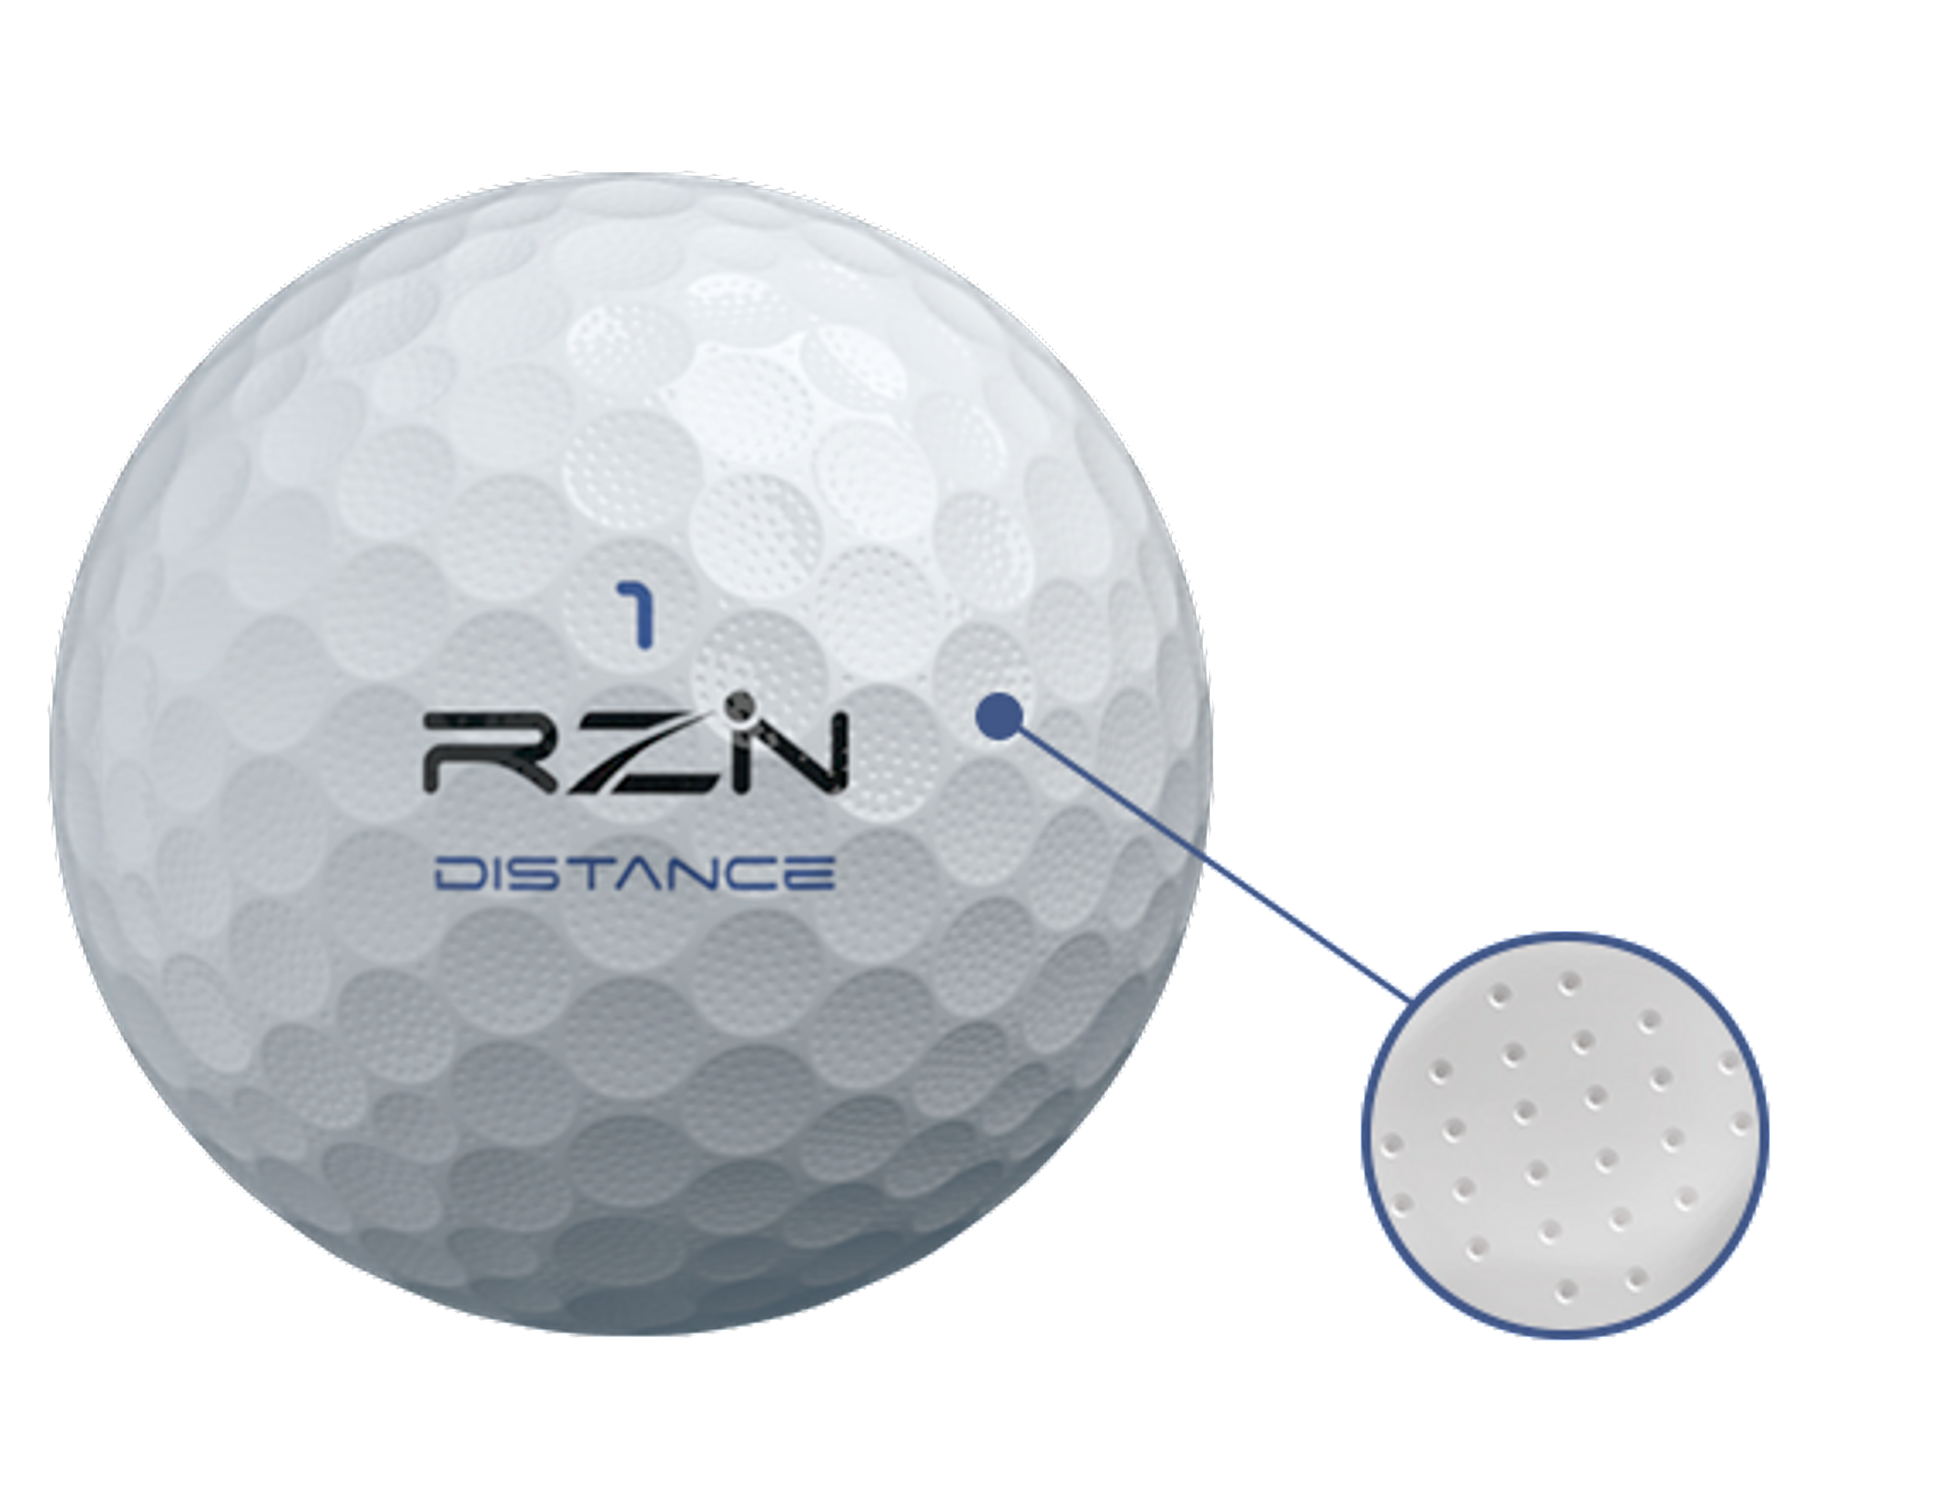 3125_b74eaf1aa2-core-golf-ball-rzn-distance-big